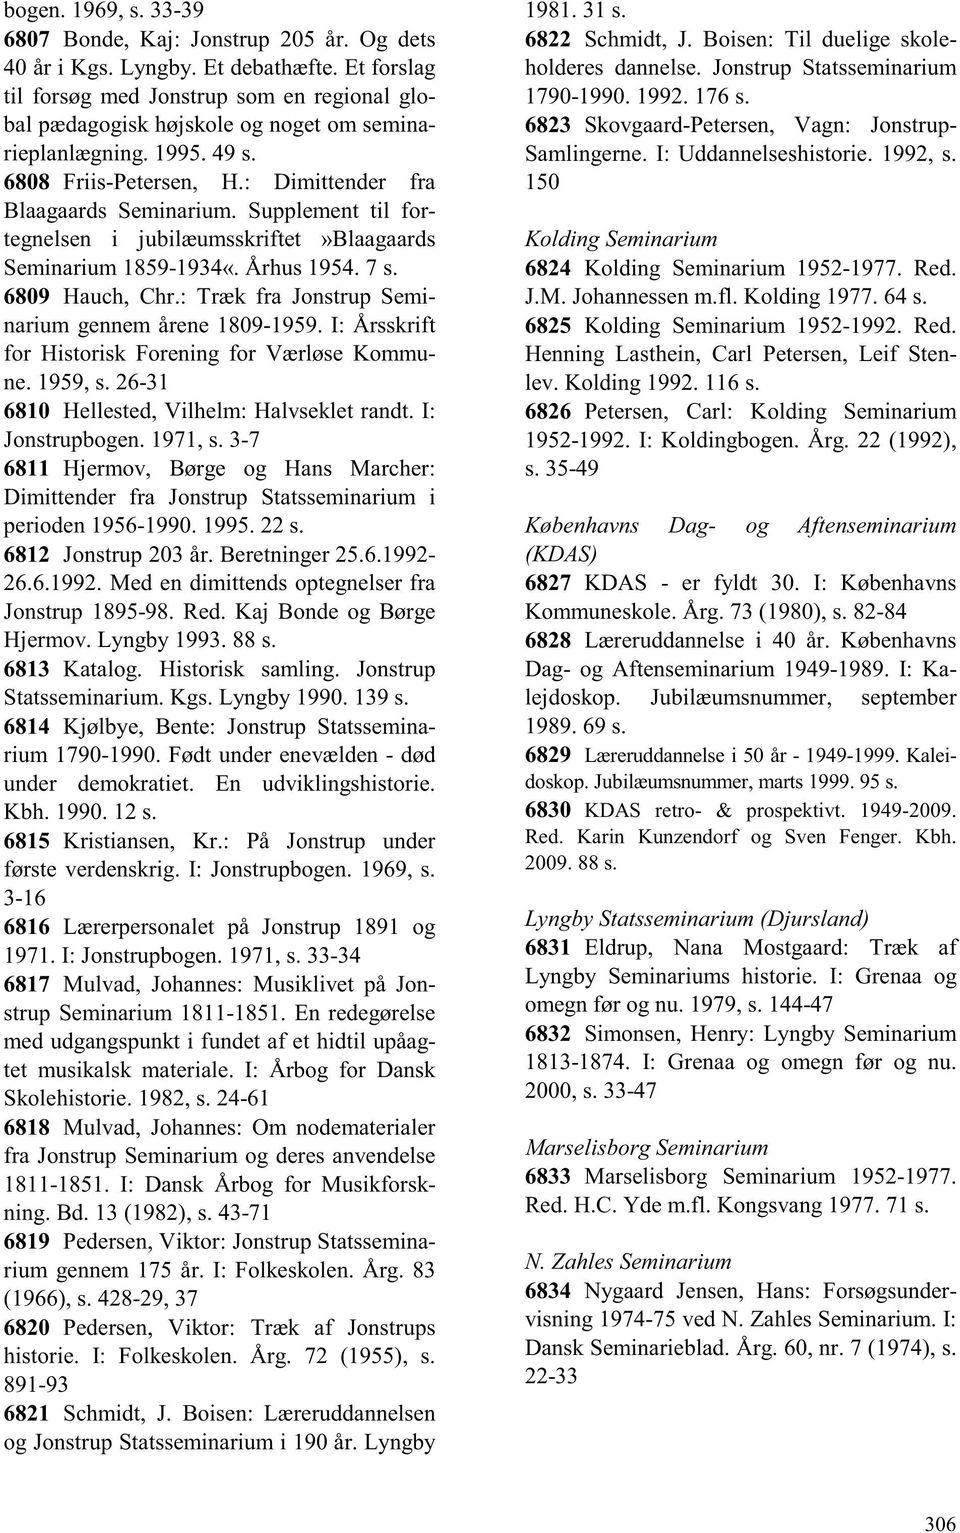 Supplement til fortegnelsen i jubilæumsskriftet»blaagaards Seminarium 1859-1934«. Århus 1954. 7 s. 6809 Hauch, Chr.: Træk fra Jonstrup Seminarium gennem årene 1809-1959.